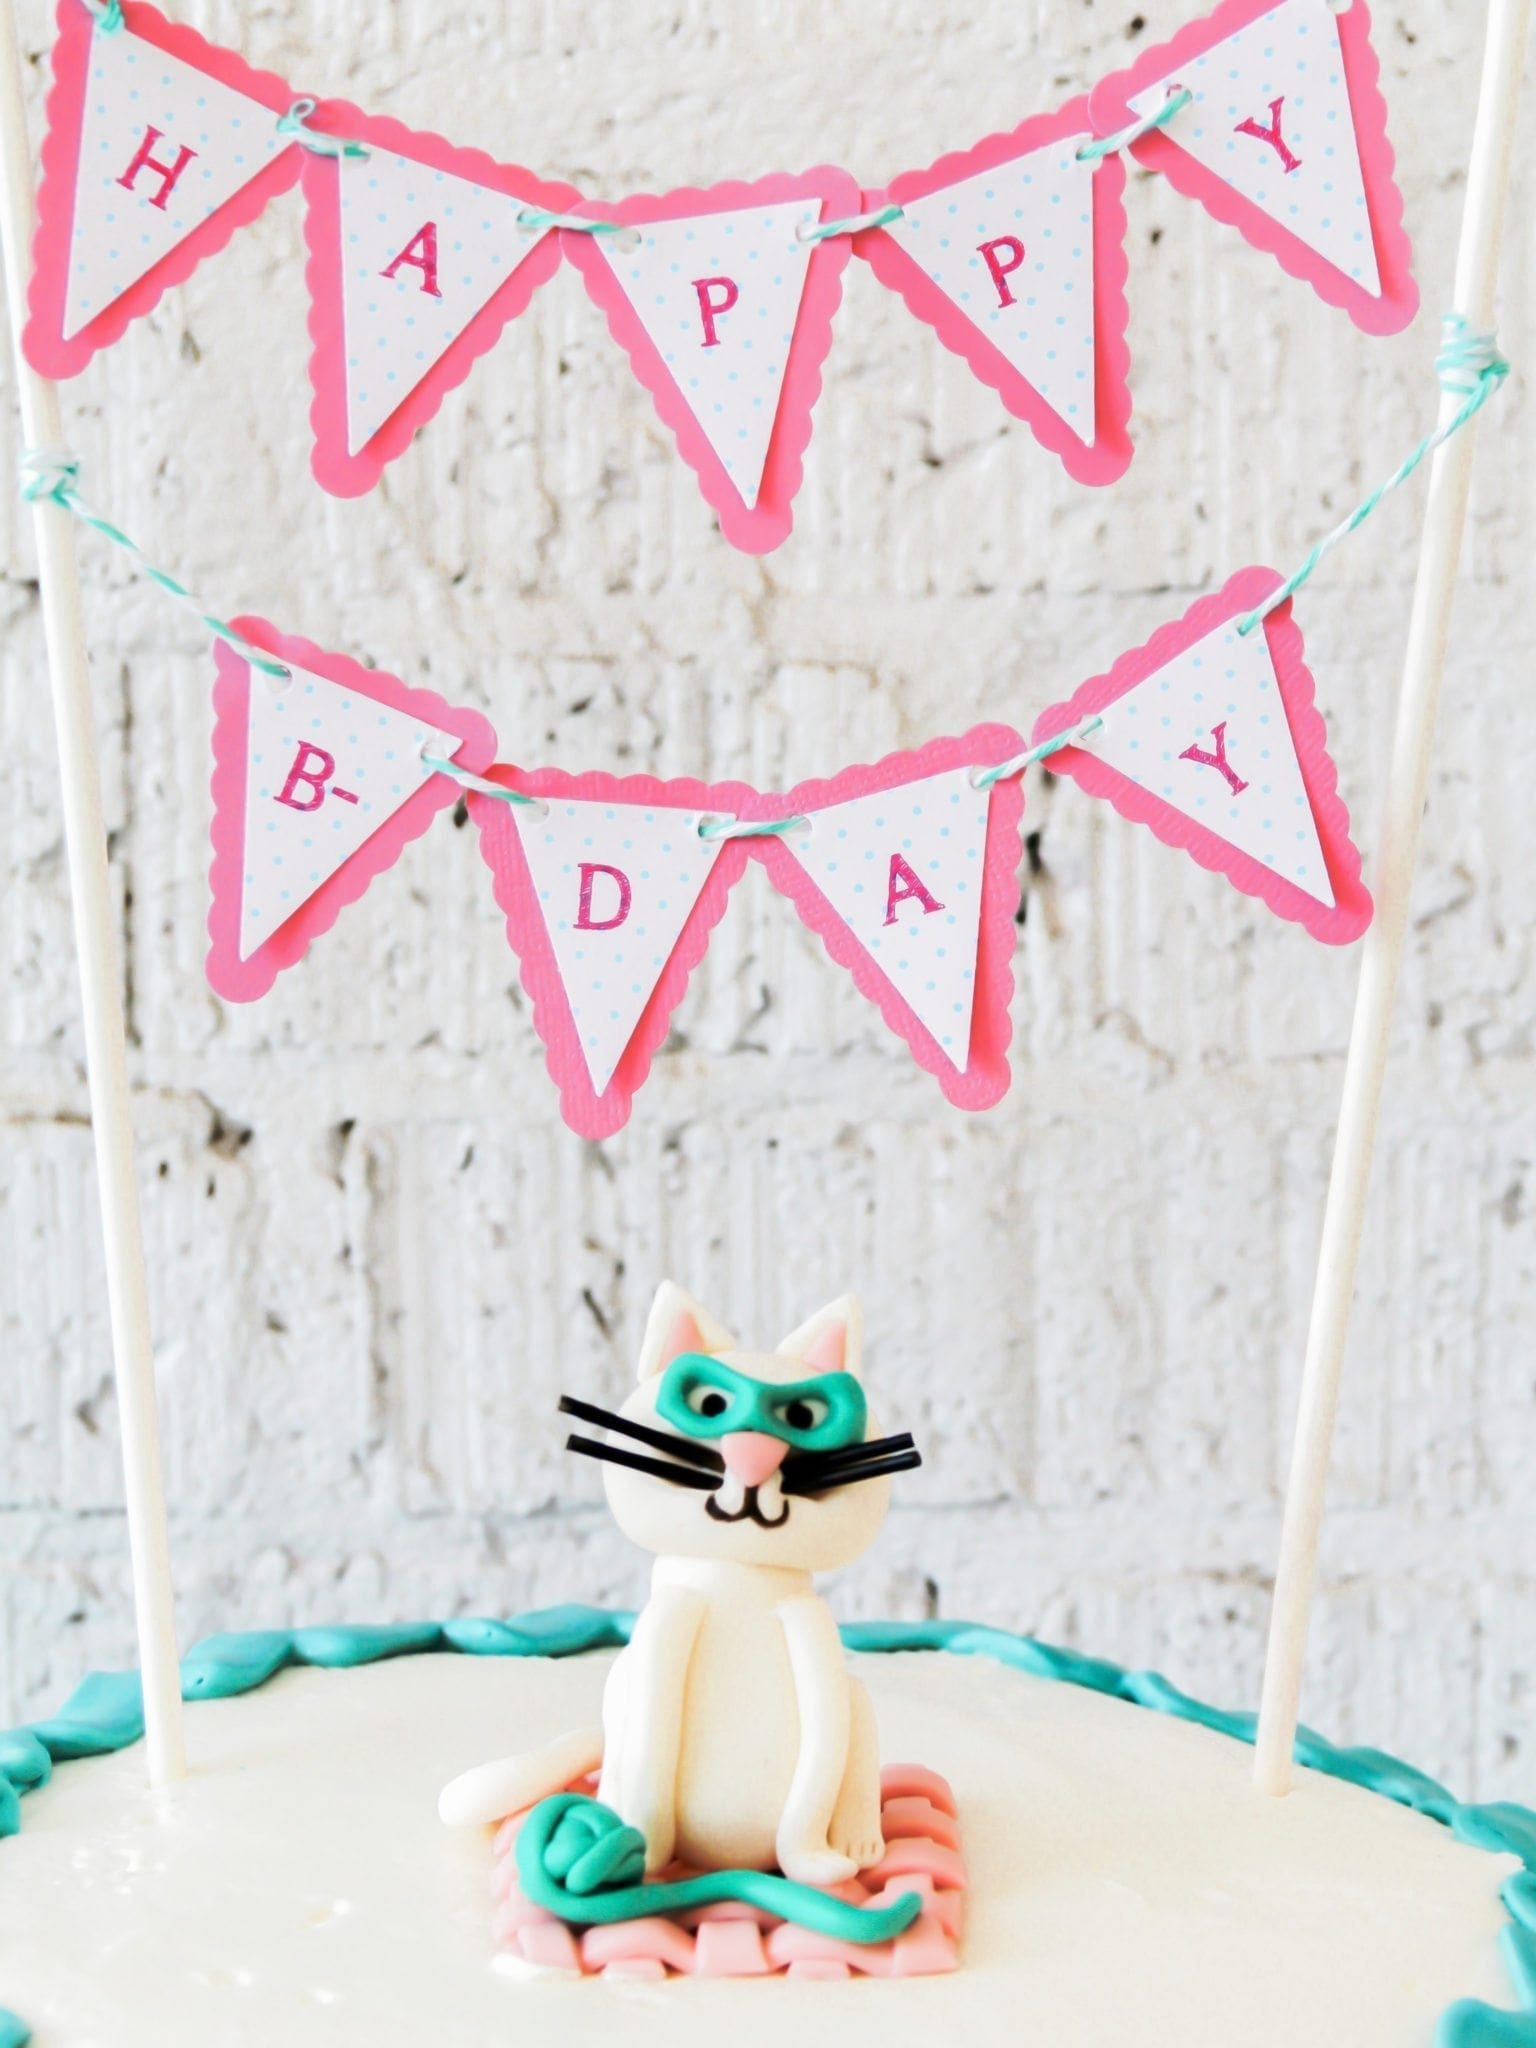 Happy B-day cat themed cake